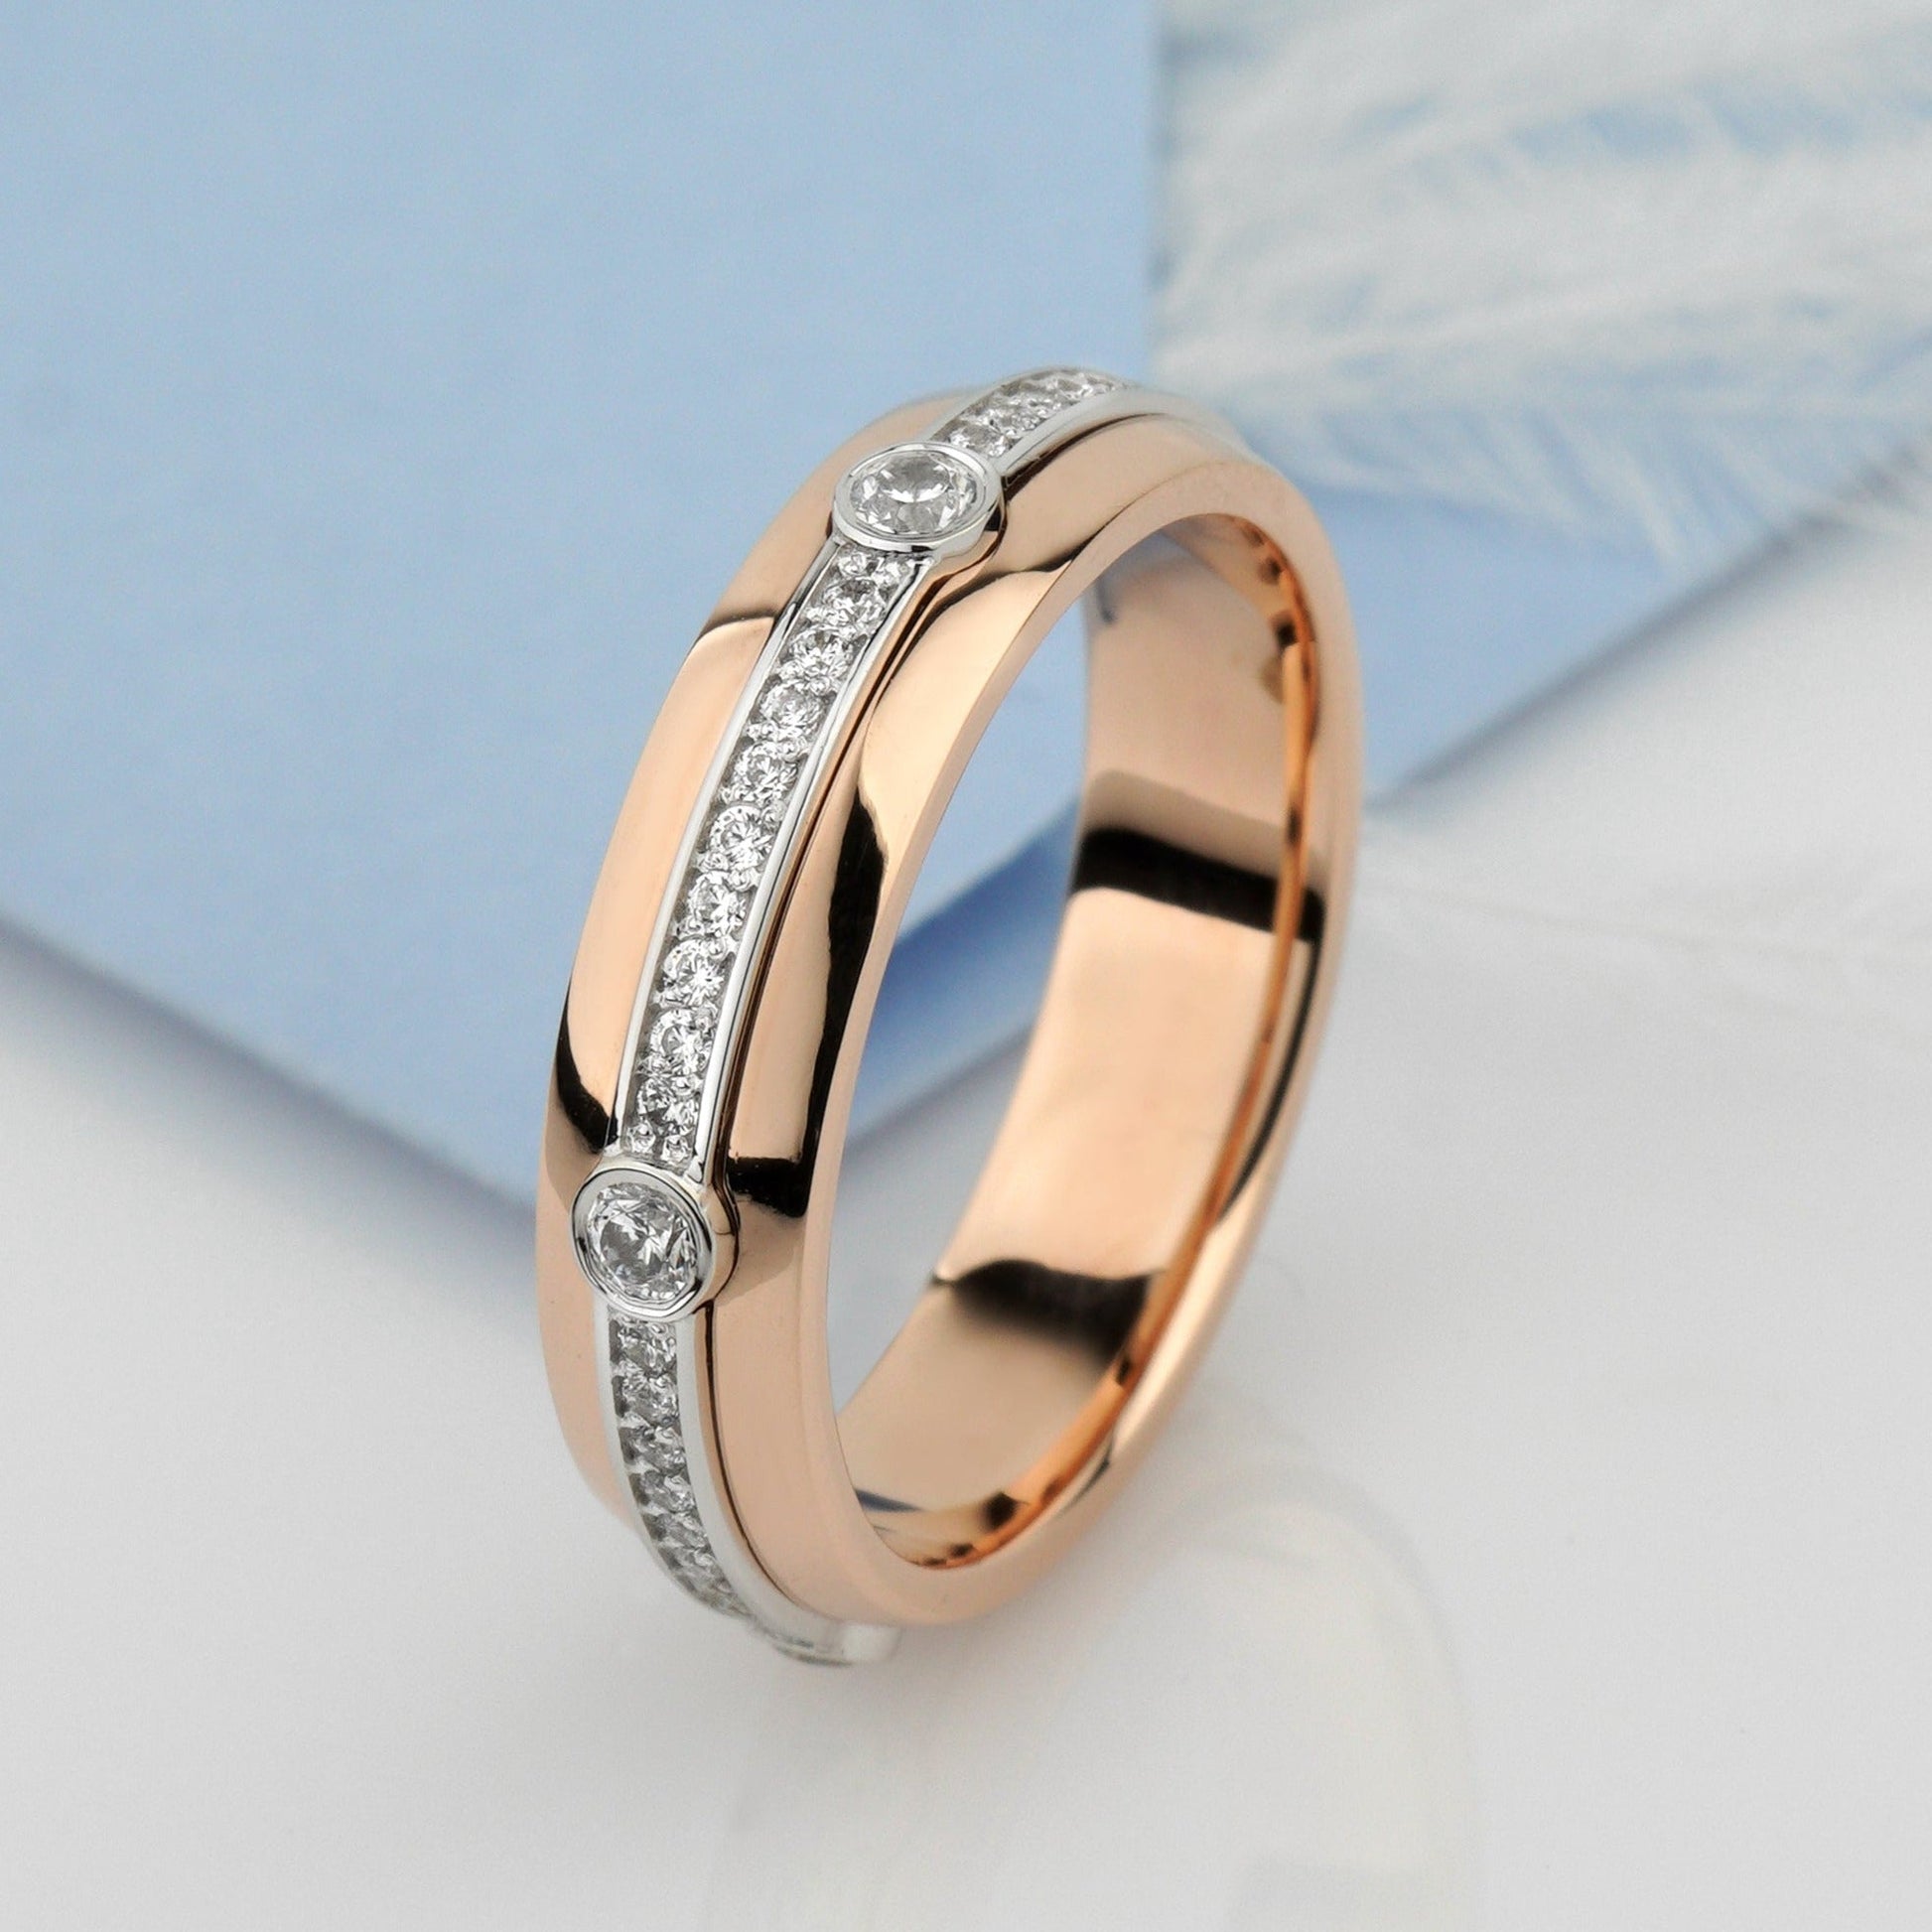 Two-tone gold wedding ring - escorialjewelry